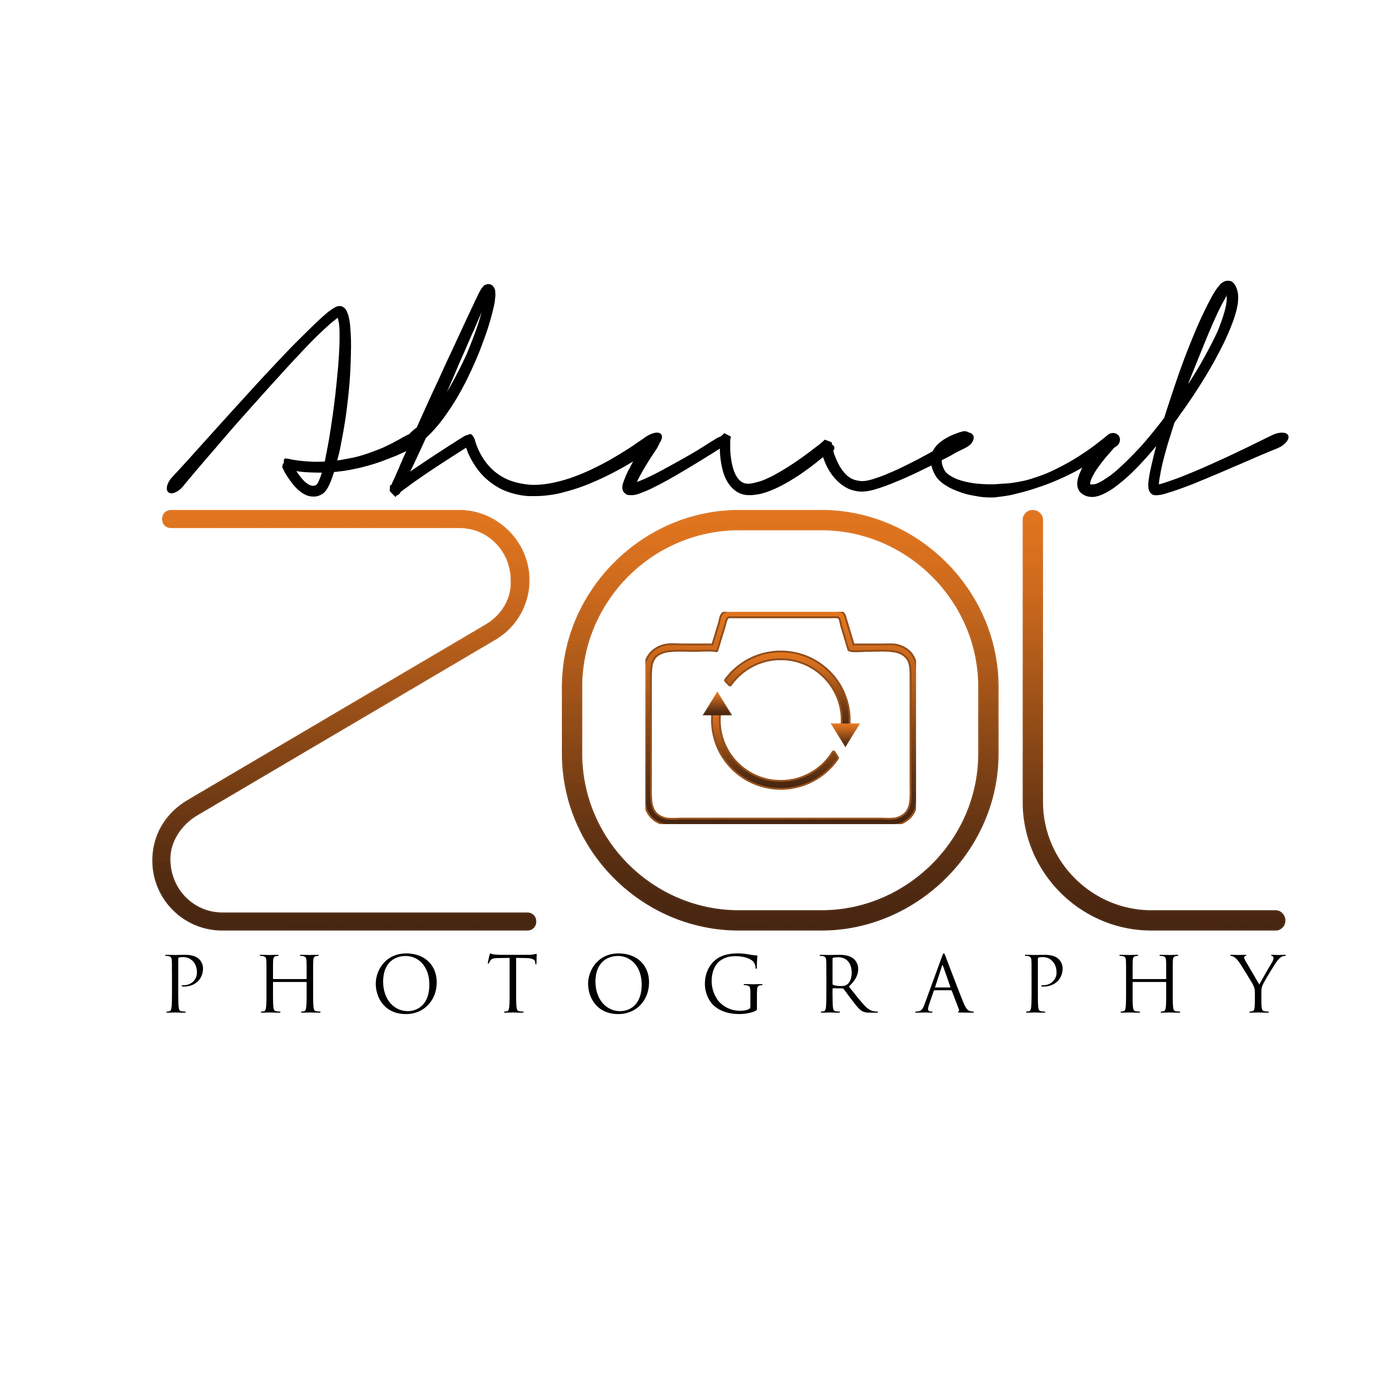 Zol Logo - Ahmad Zol Photography – ahmadzol